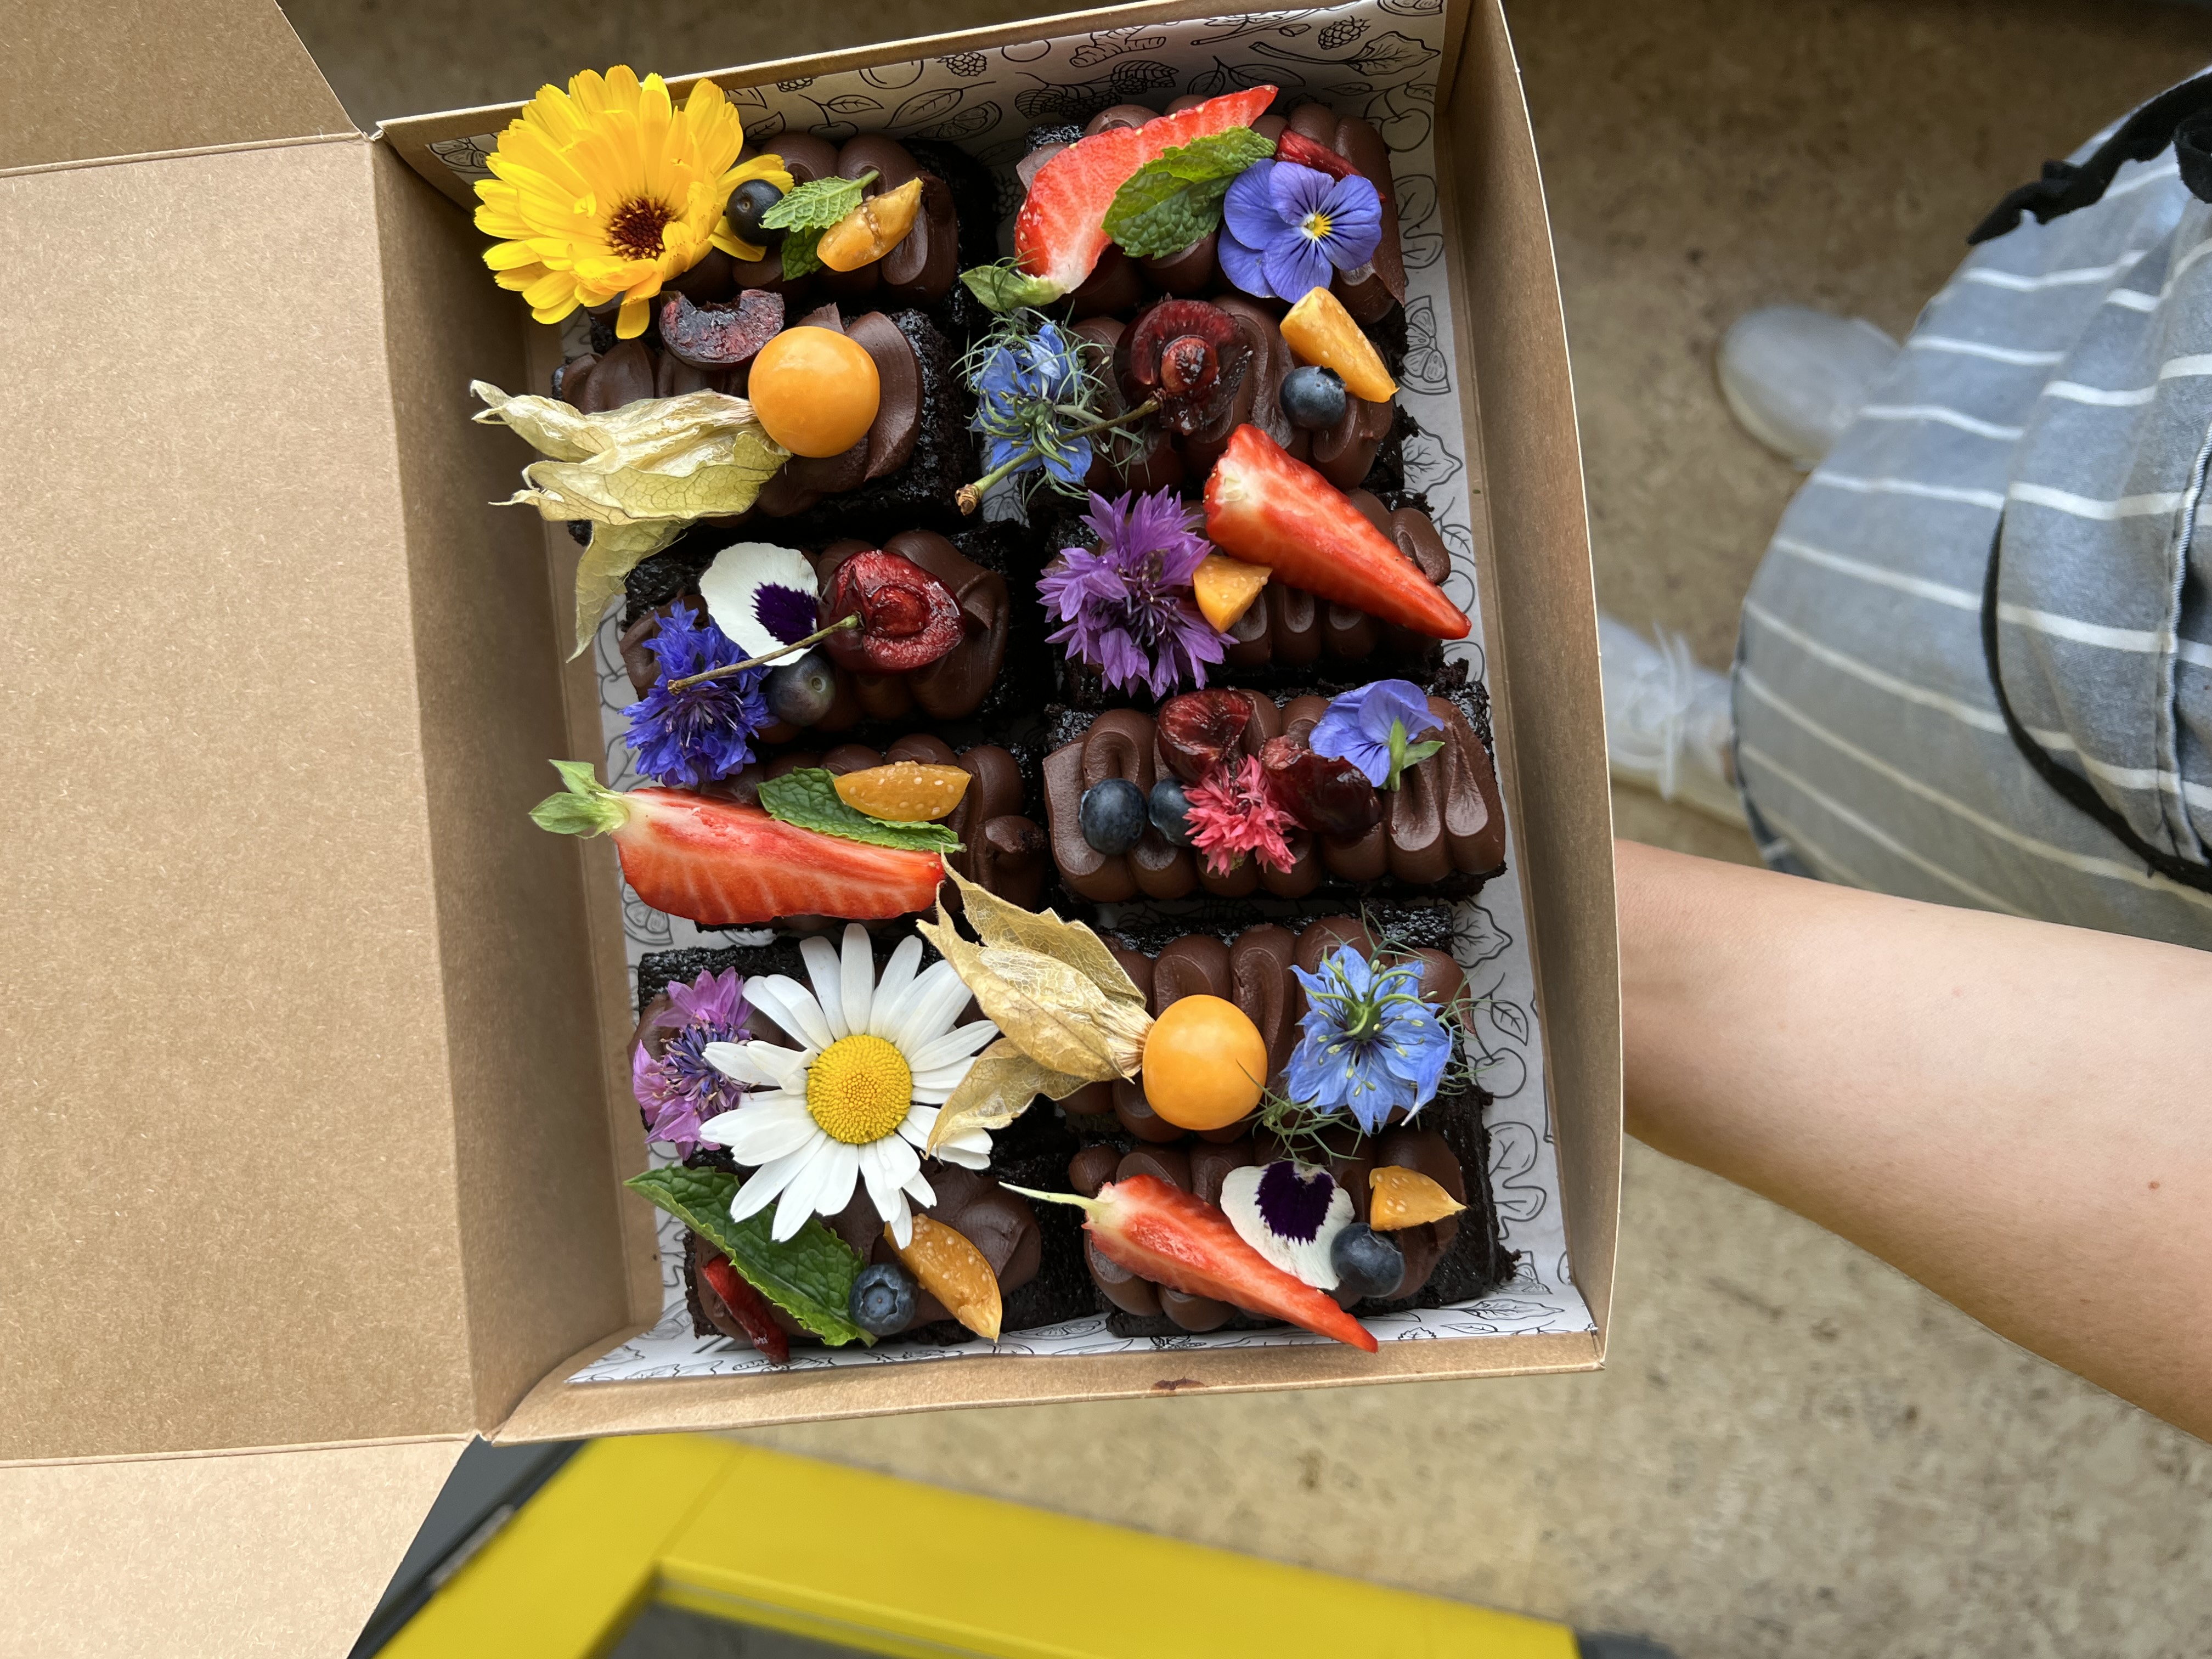 Rainbow Love Bites: EK Bakery's Little Pride Cakes with Fruit and Flower Delights!